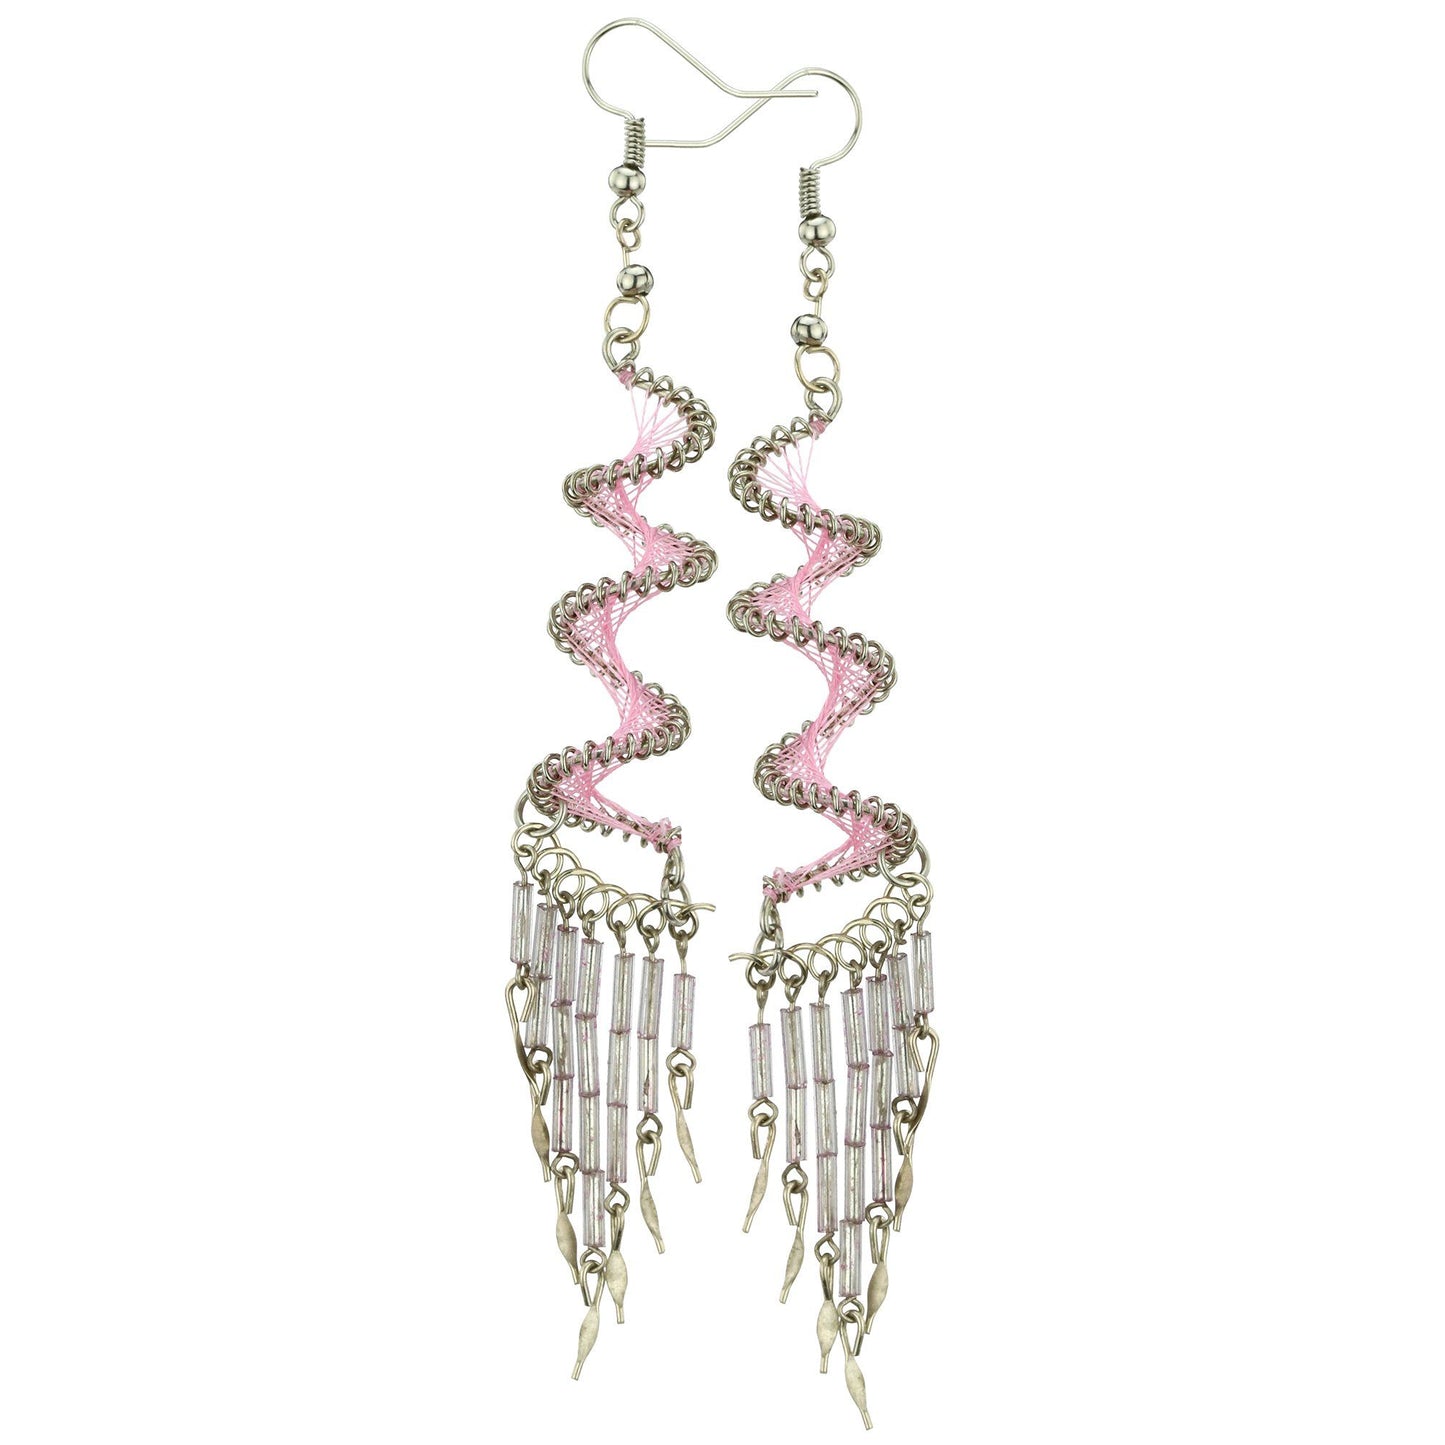 Spiral Swirl Peruvian Thread Earrings